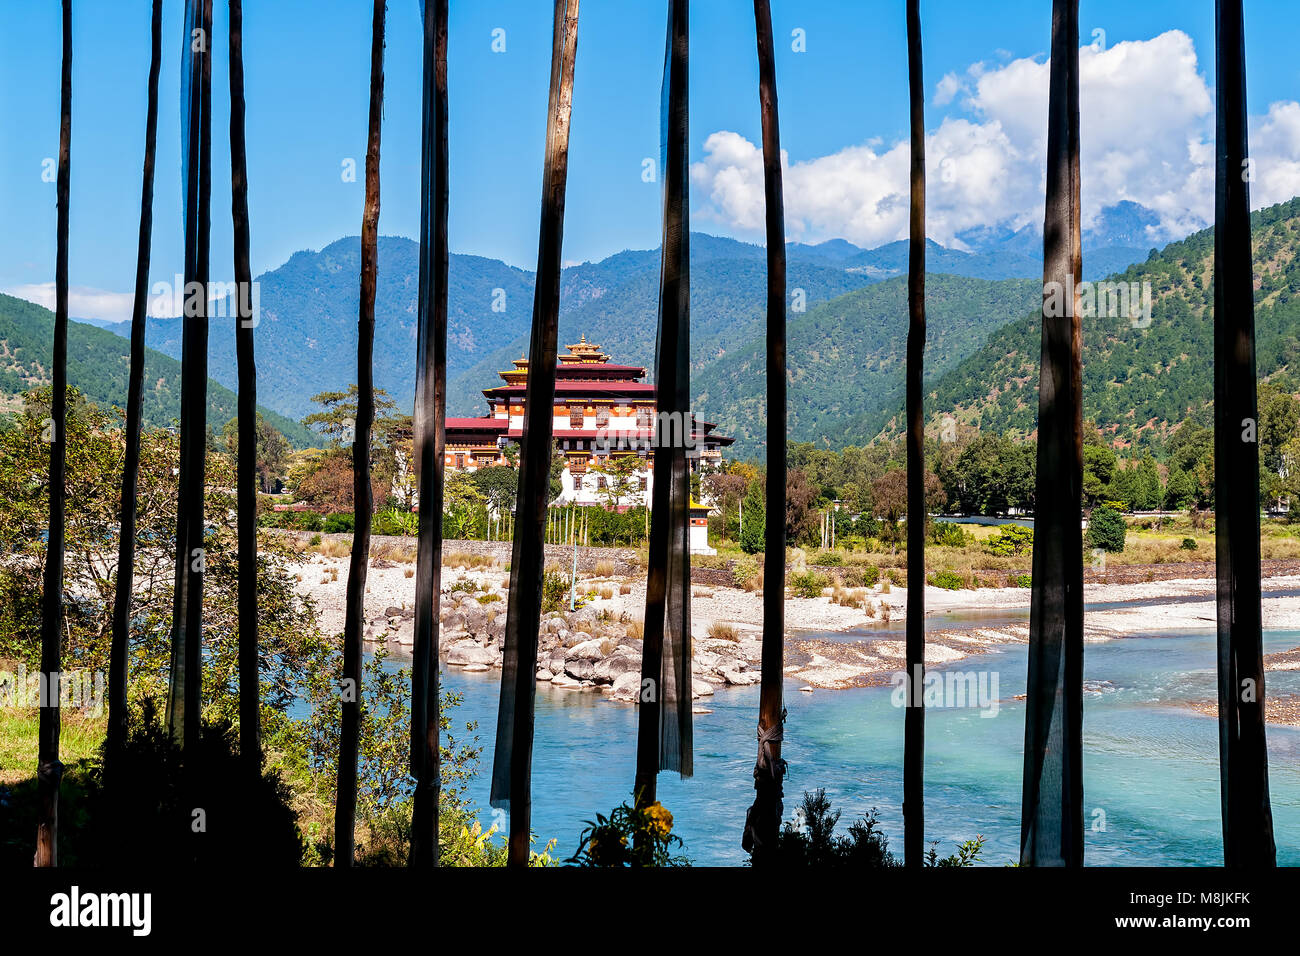 Punakha Dzong with prayer flags in foreground - Bhutan Stock Photo